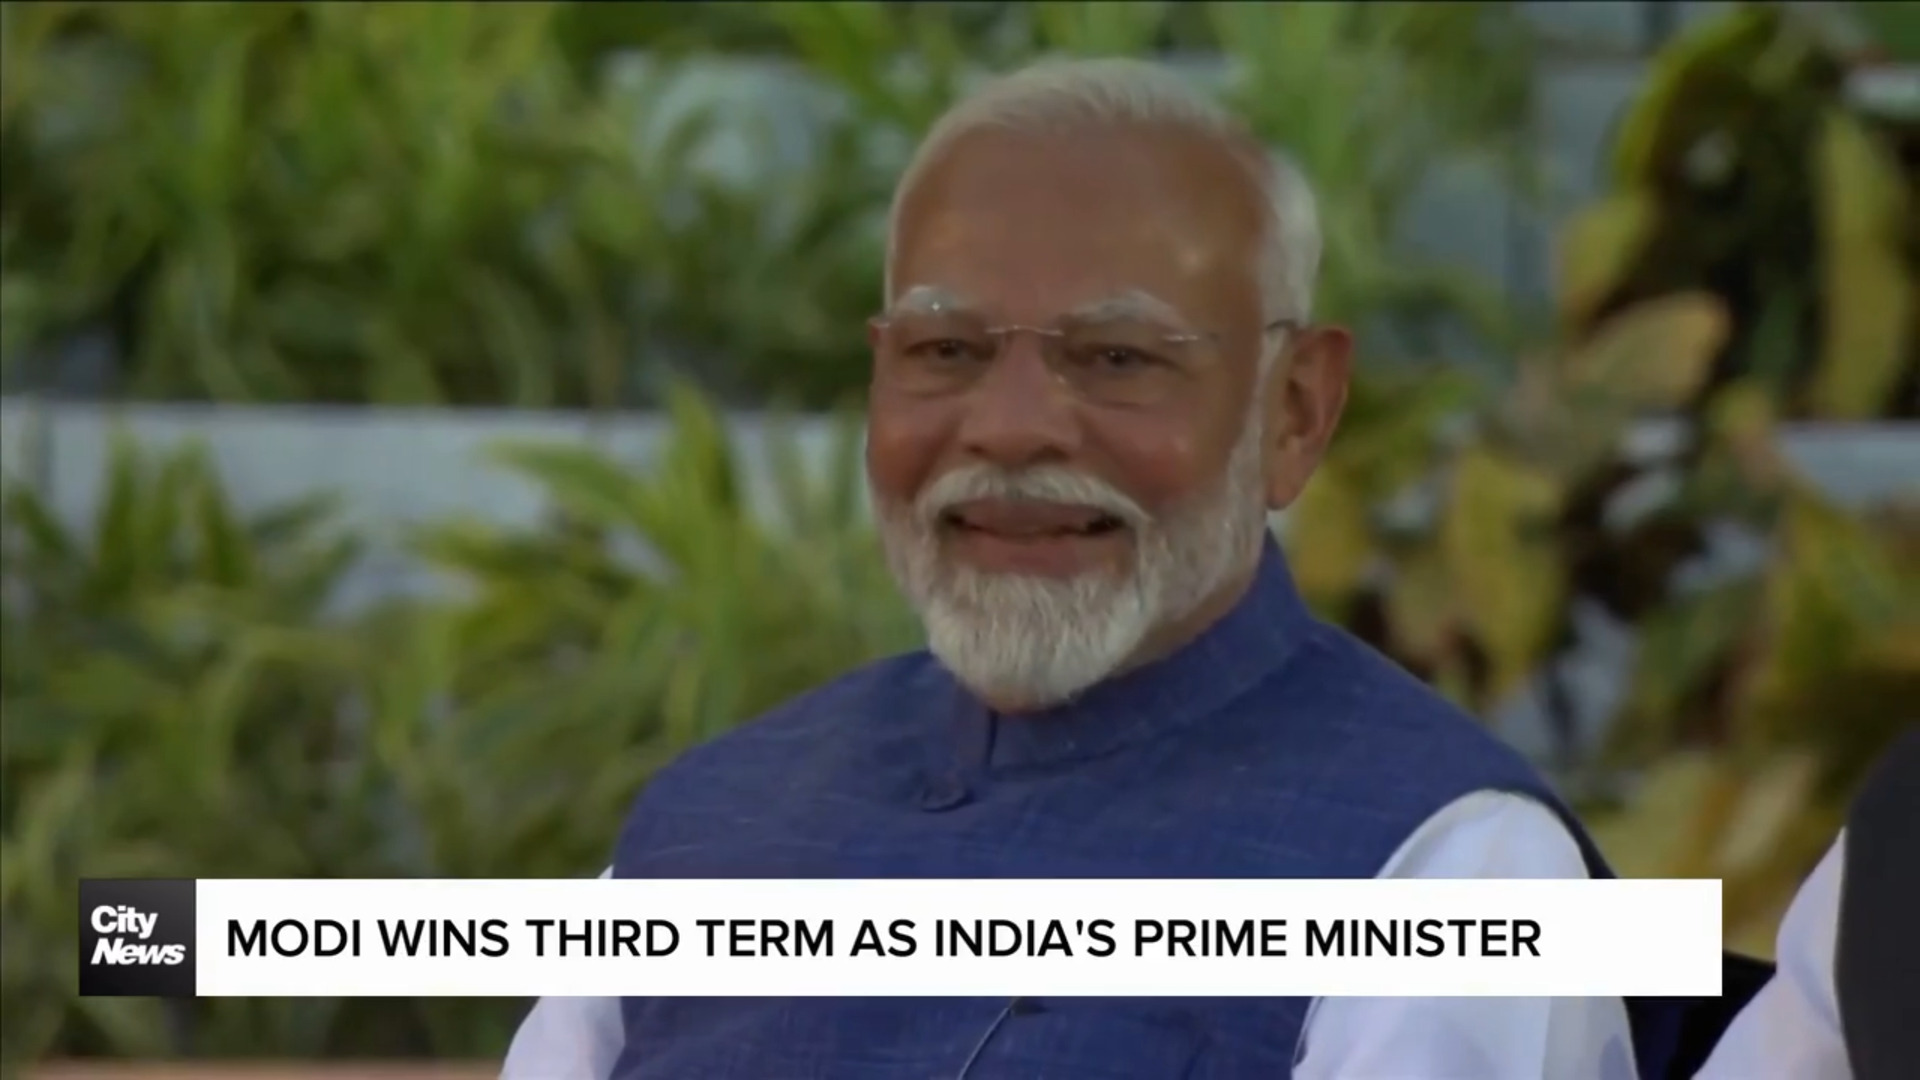 Modi wins 3rd term as India's prime minister